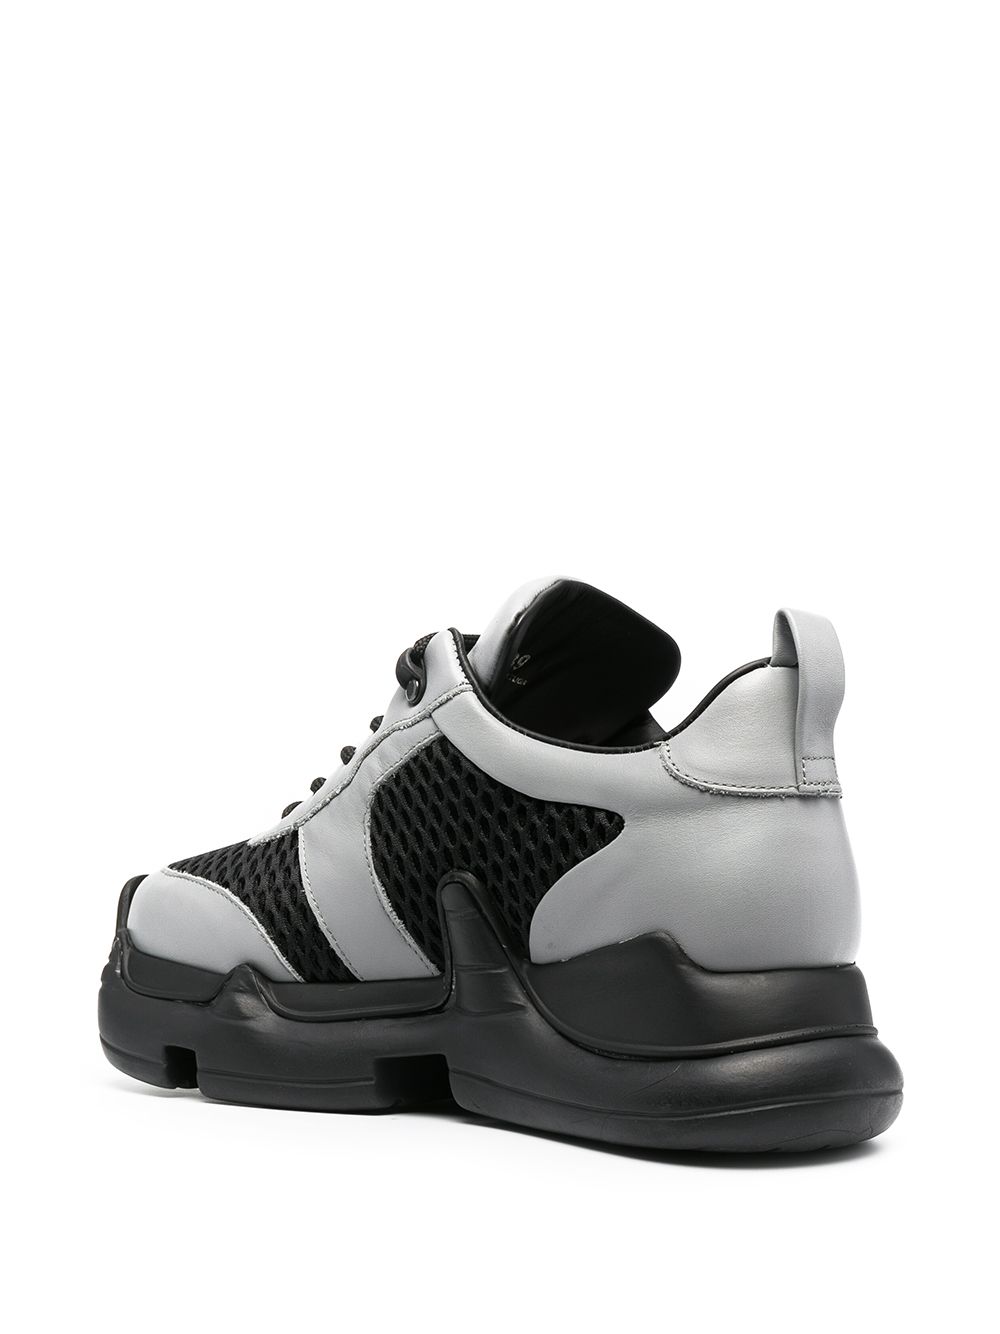  Swear Air Revive Nitro S Sneakers - Black 